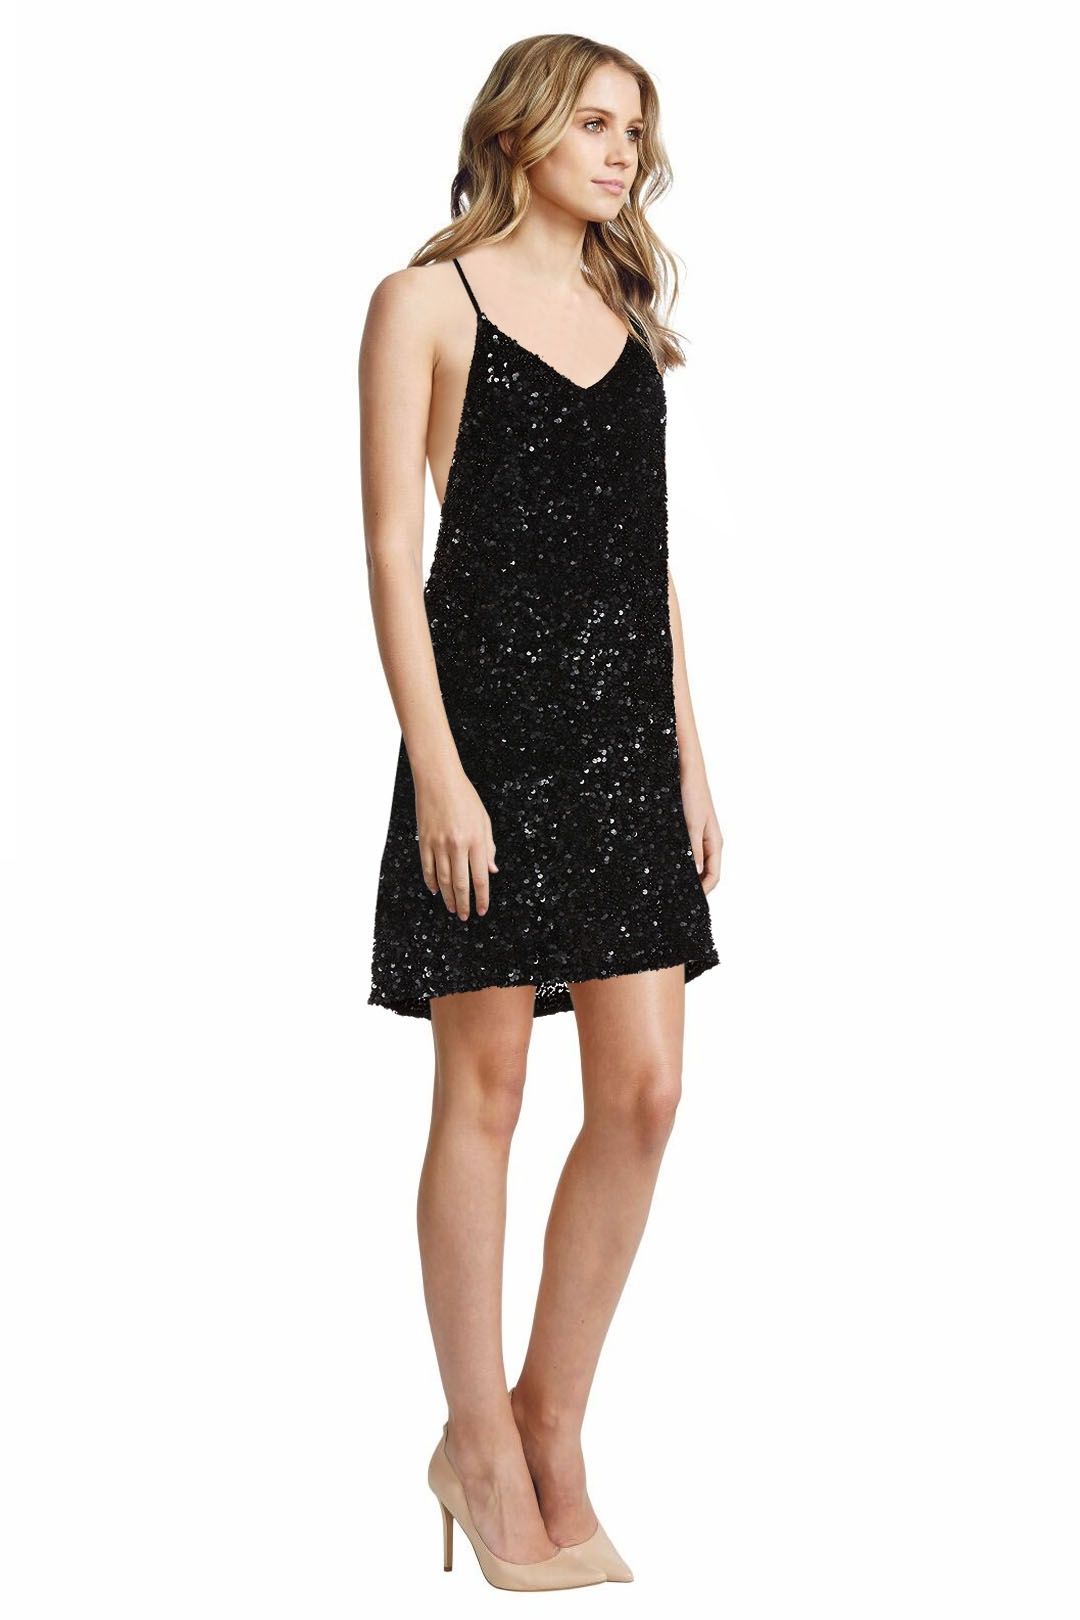 MLV - Olivia Mini Sequin Dress - Black - Side